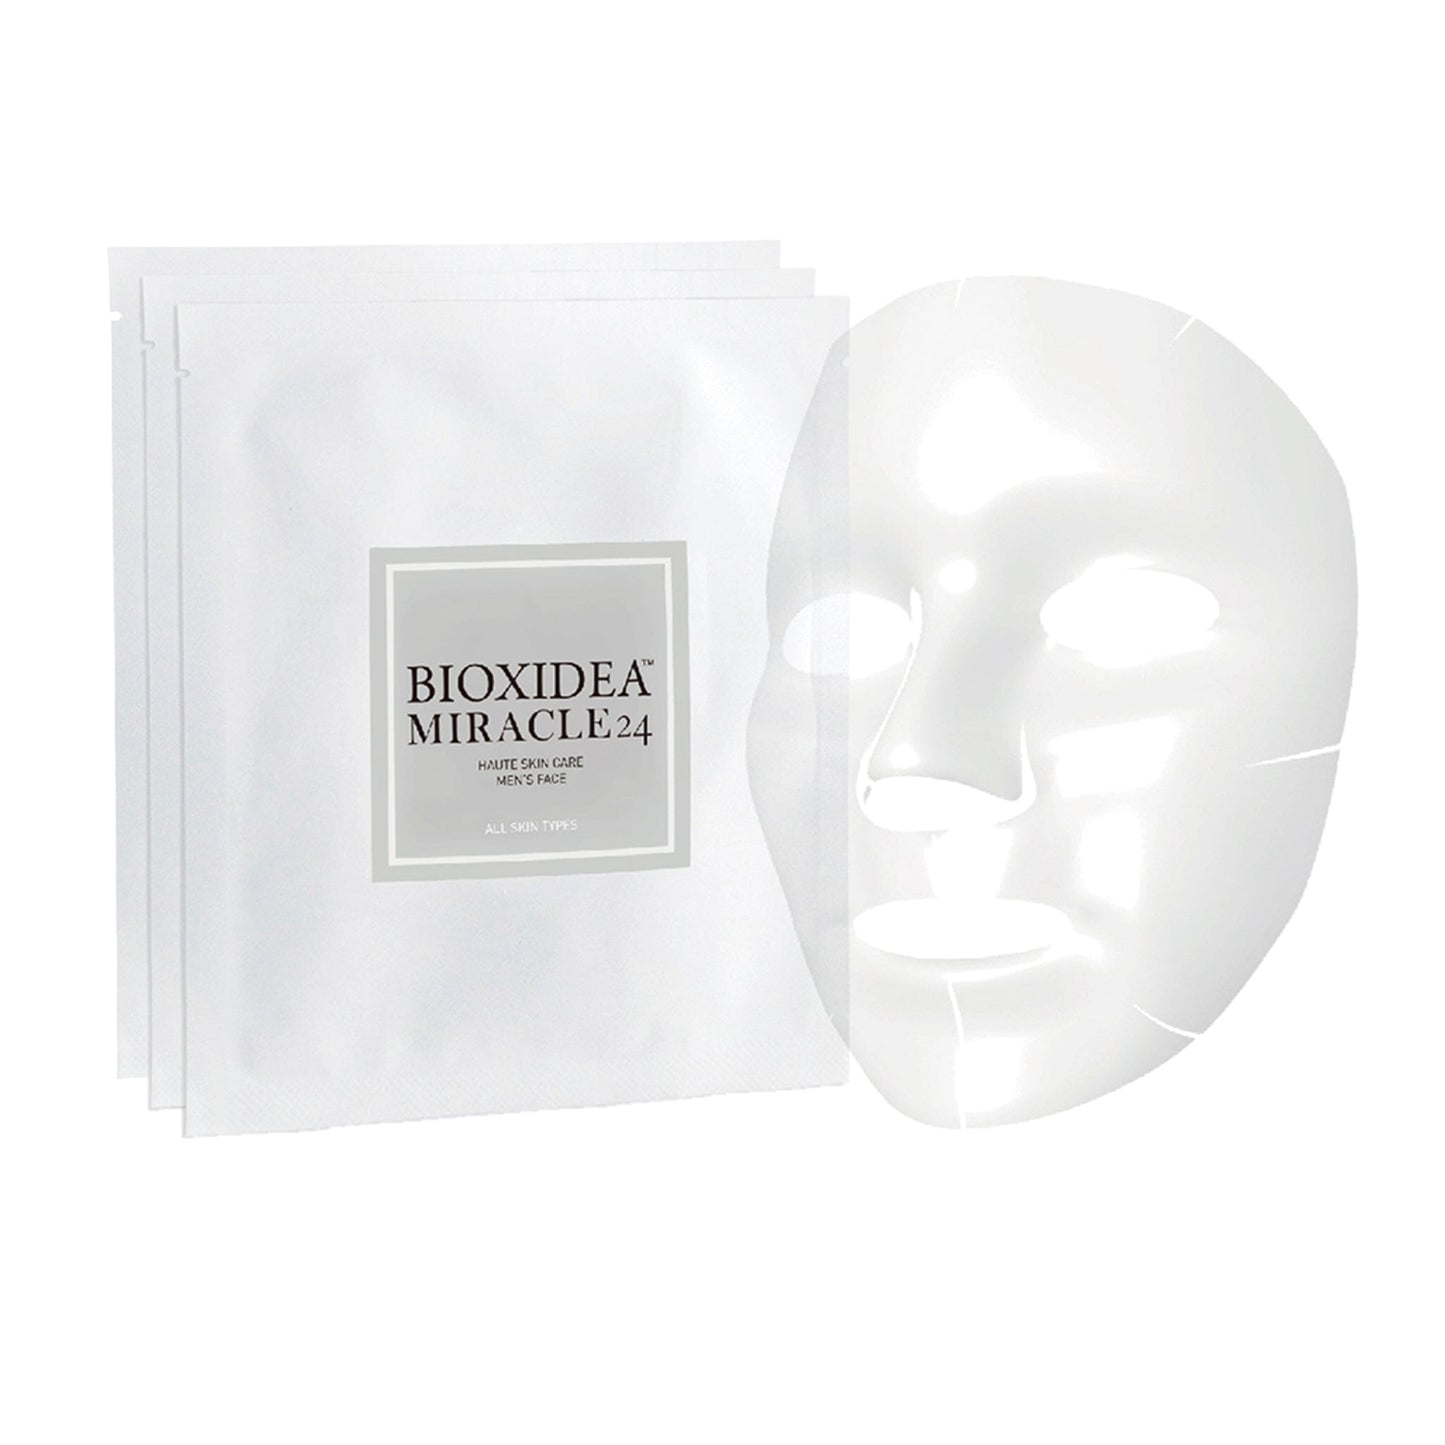 BIOXIDEA Miracle24 Face Mask for Men Mask